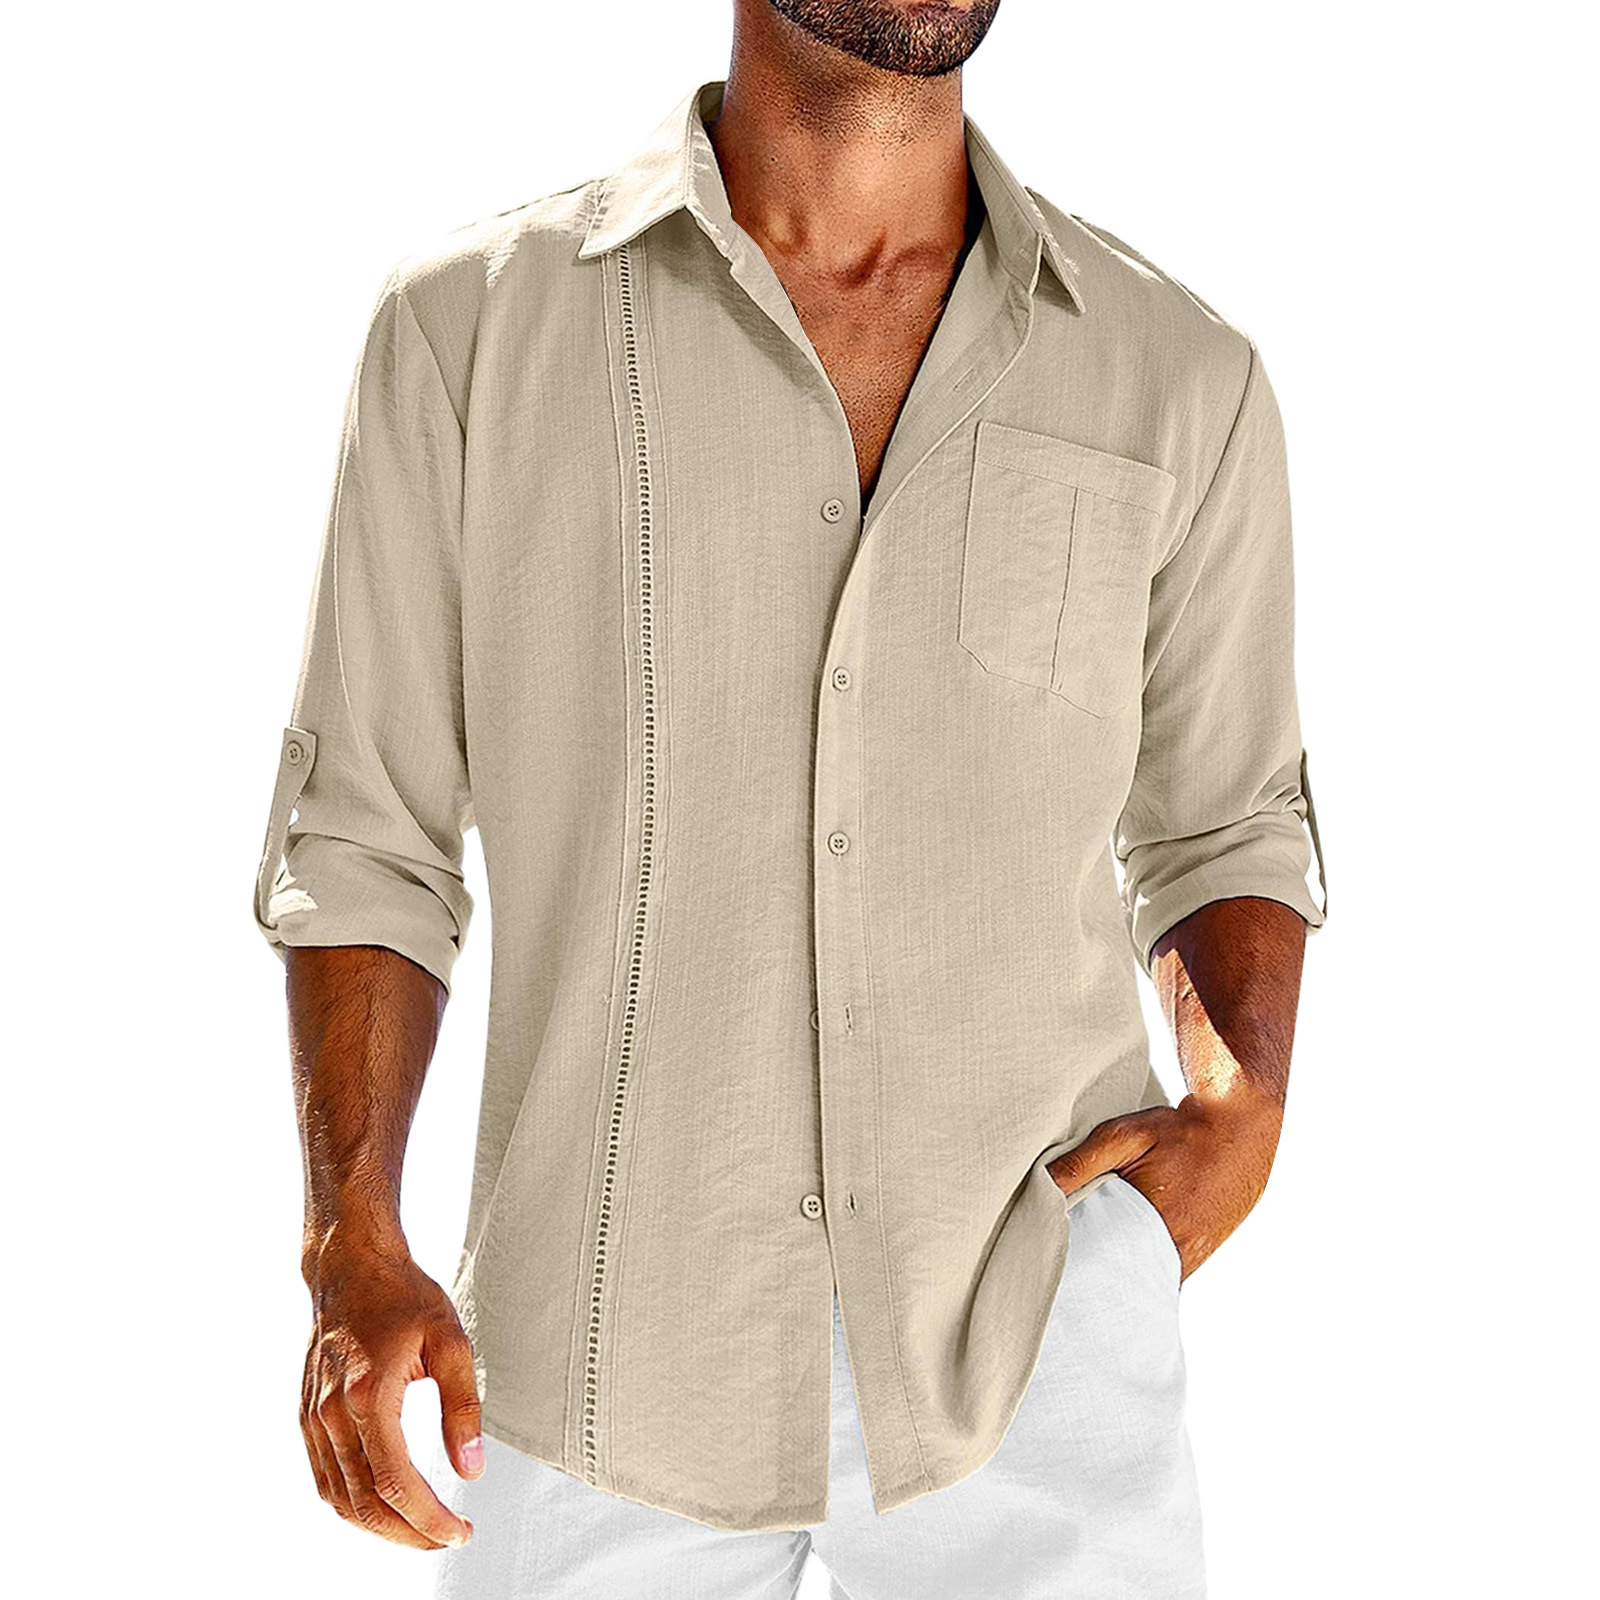 Luis | Lace Polo Pocket Shirt - Apricot / S - AMVIM